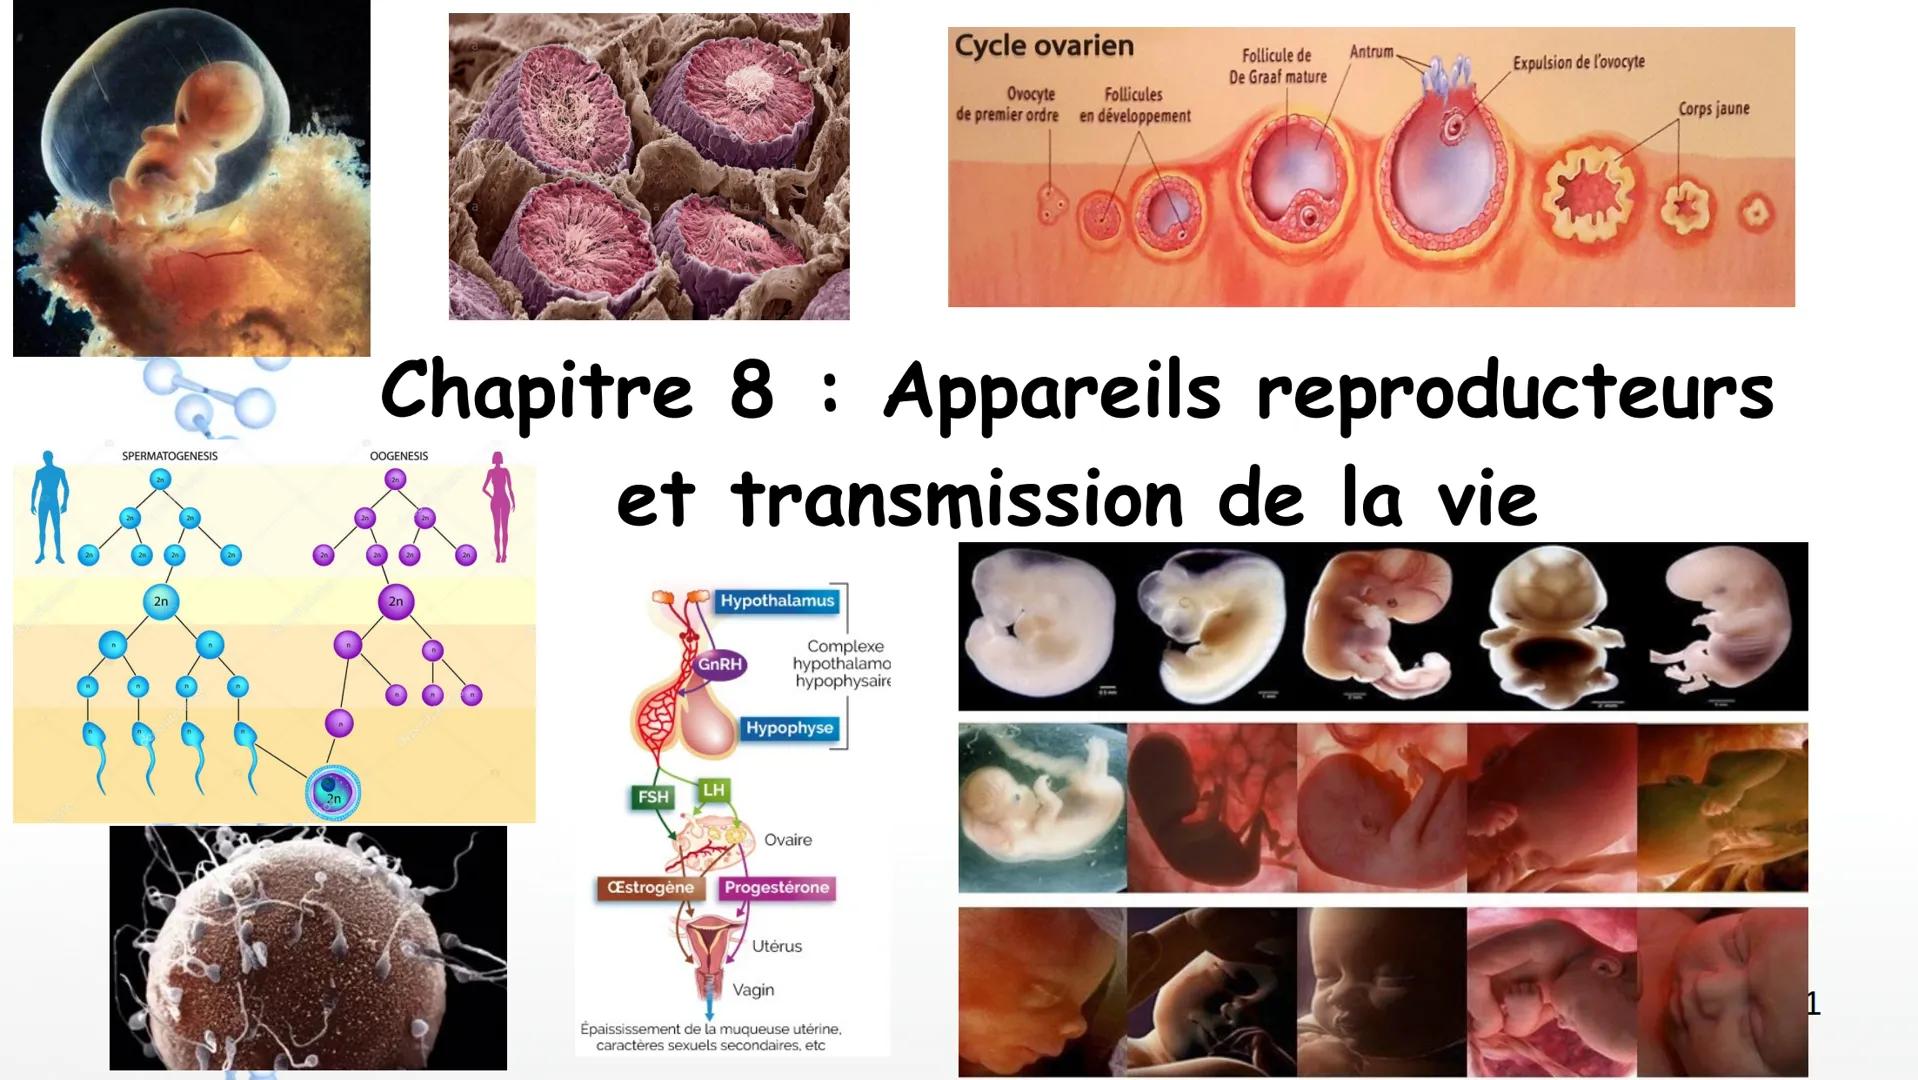 SPERMATOGENESIS
2n
2n
OOGENESIS
2n
FSH
Hypothalamus
Chapitre 8 Appareils reproducteurs
et transmission de la vie
OOC83
GnRH
LH
Complexe
hypo